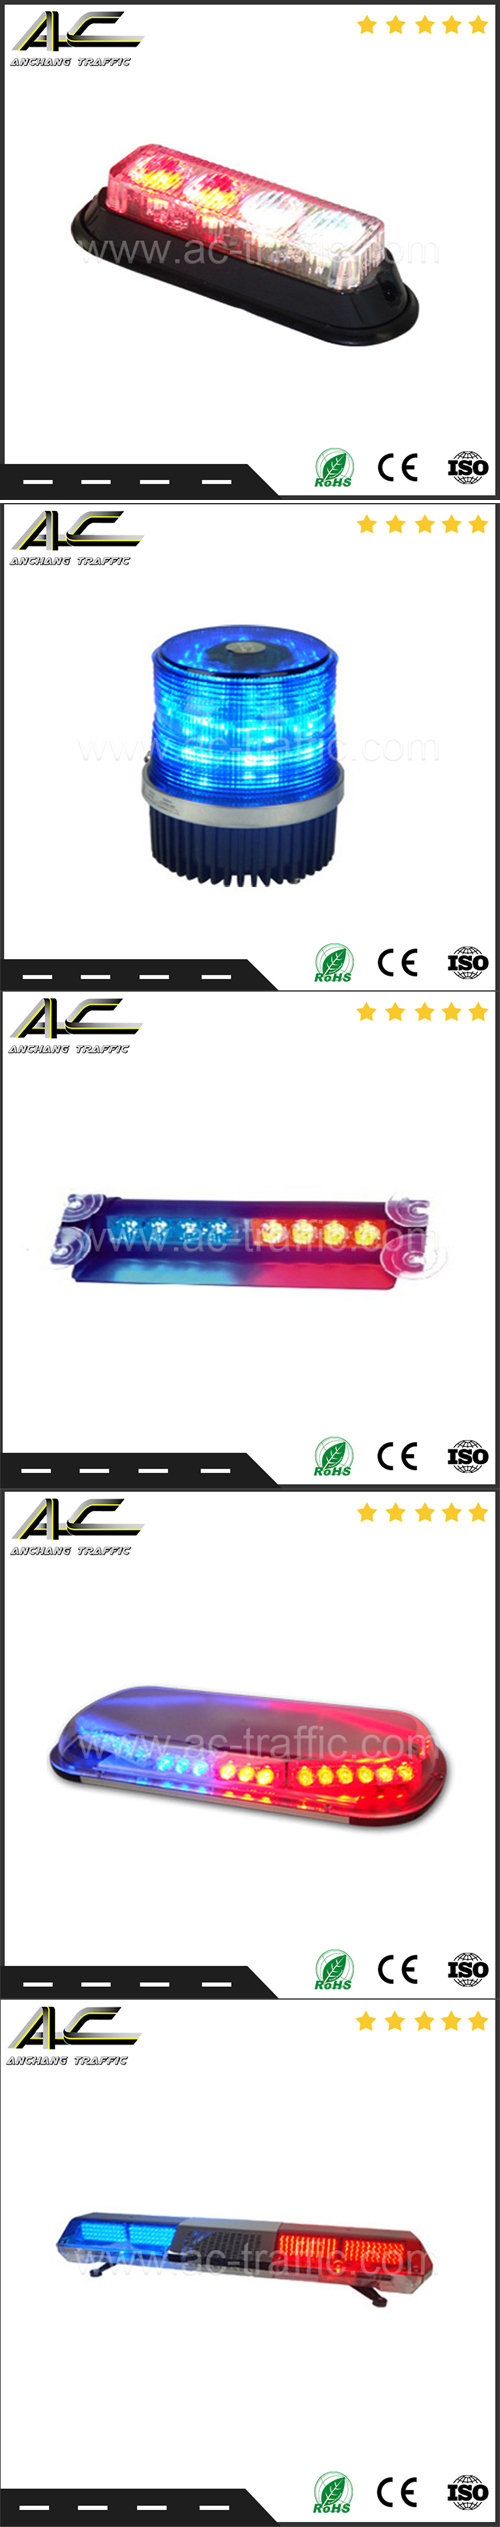 Convenience Car Interior Windscreen Mount LED Visor Light Bar for Safety